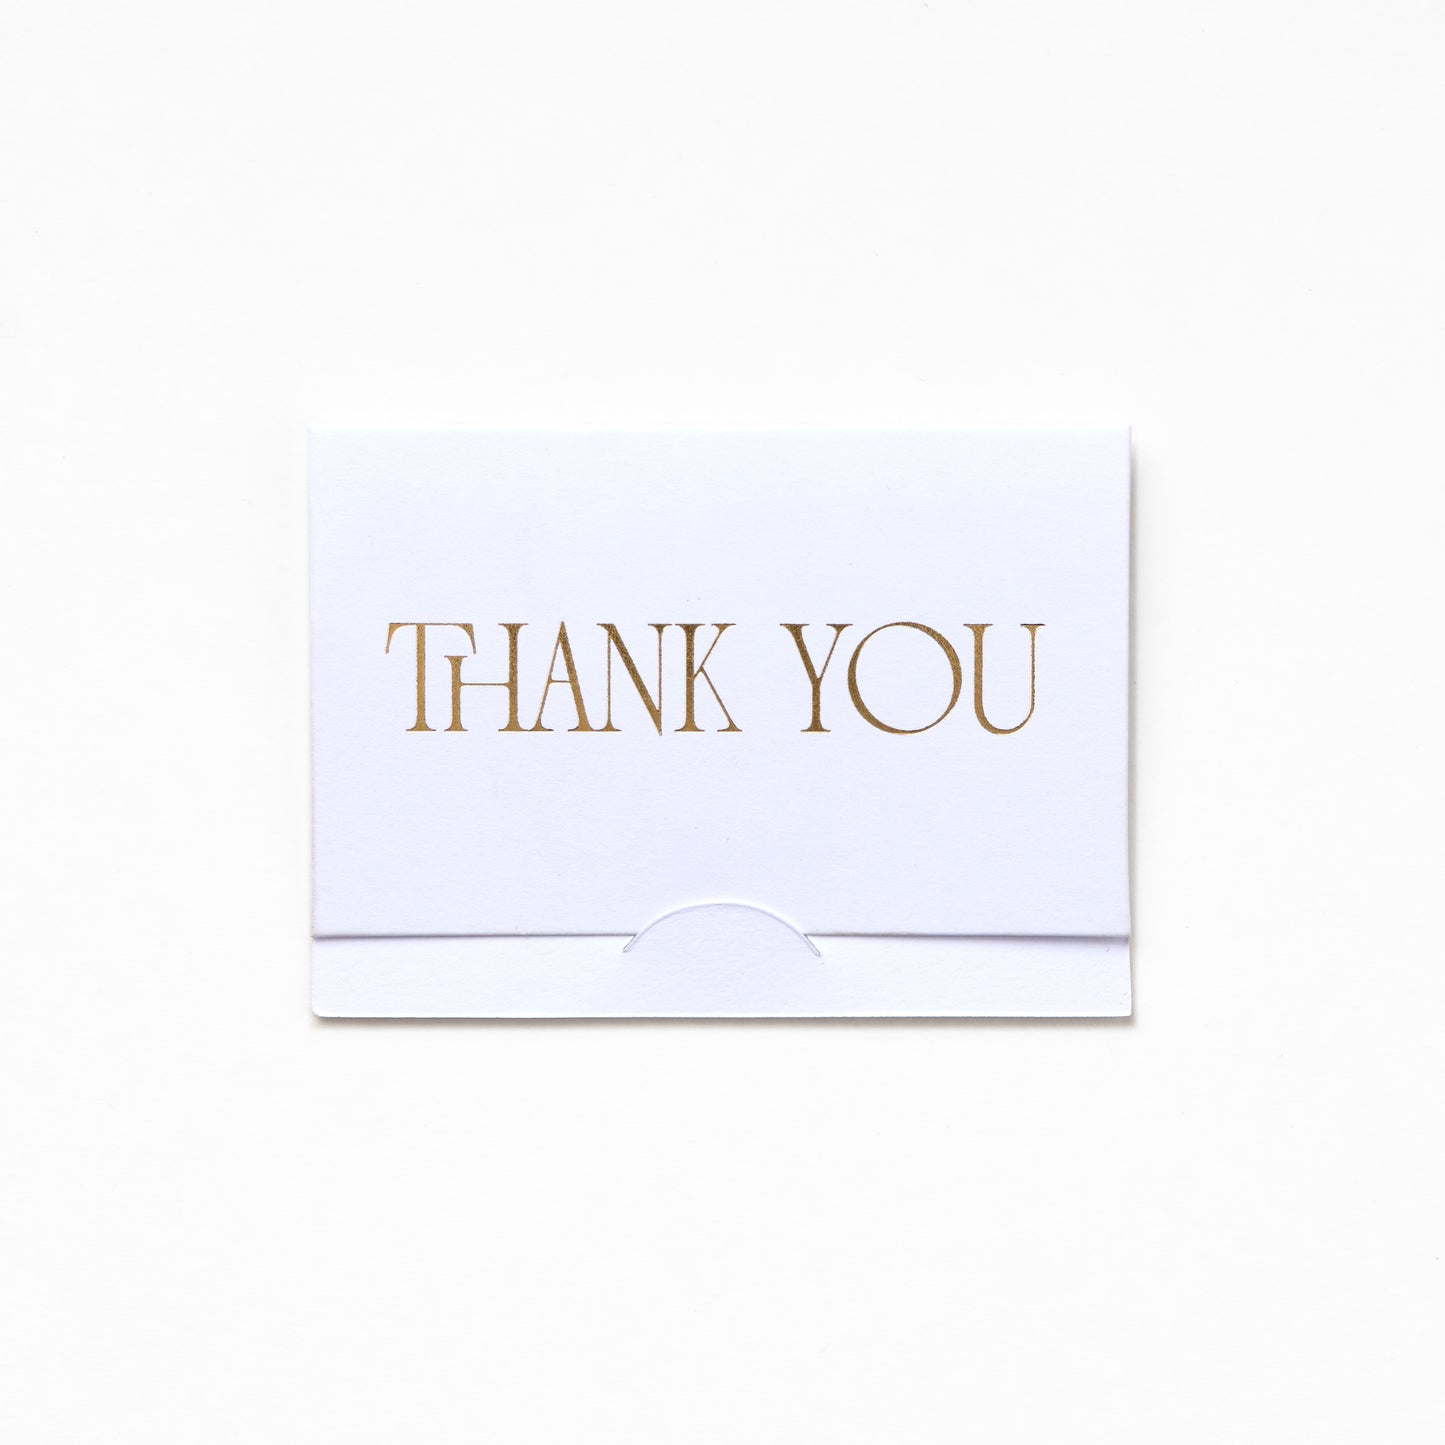 Pocket Greeting Card - THANK YOU 02